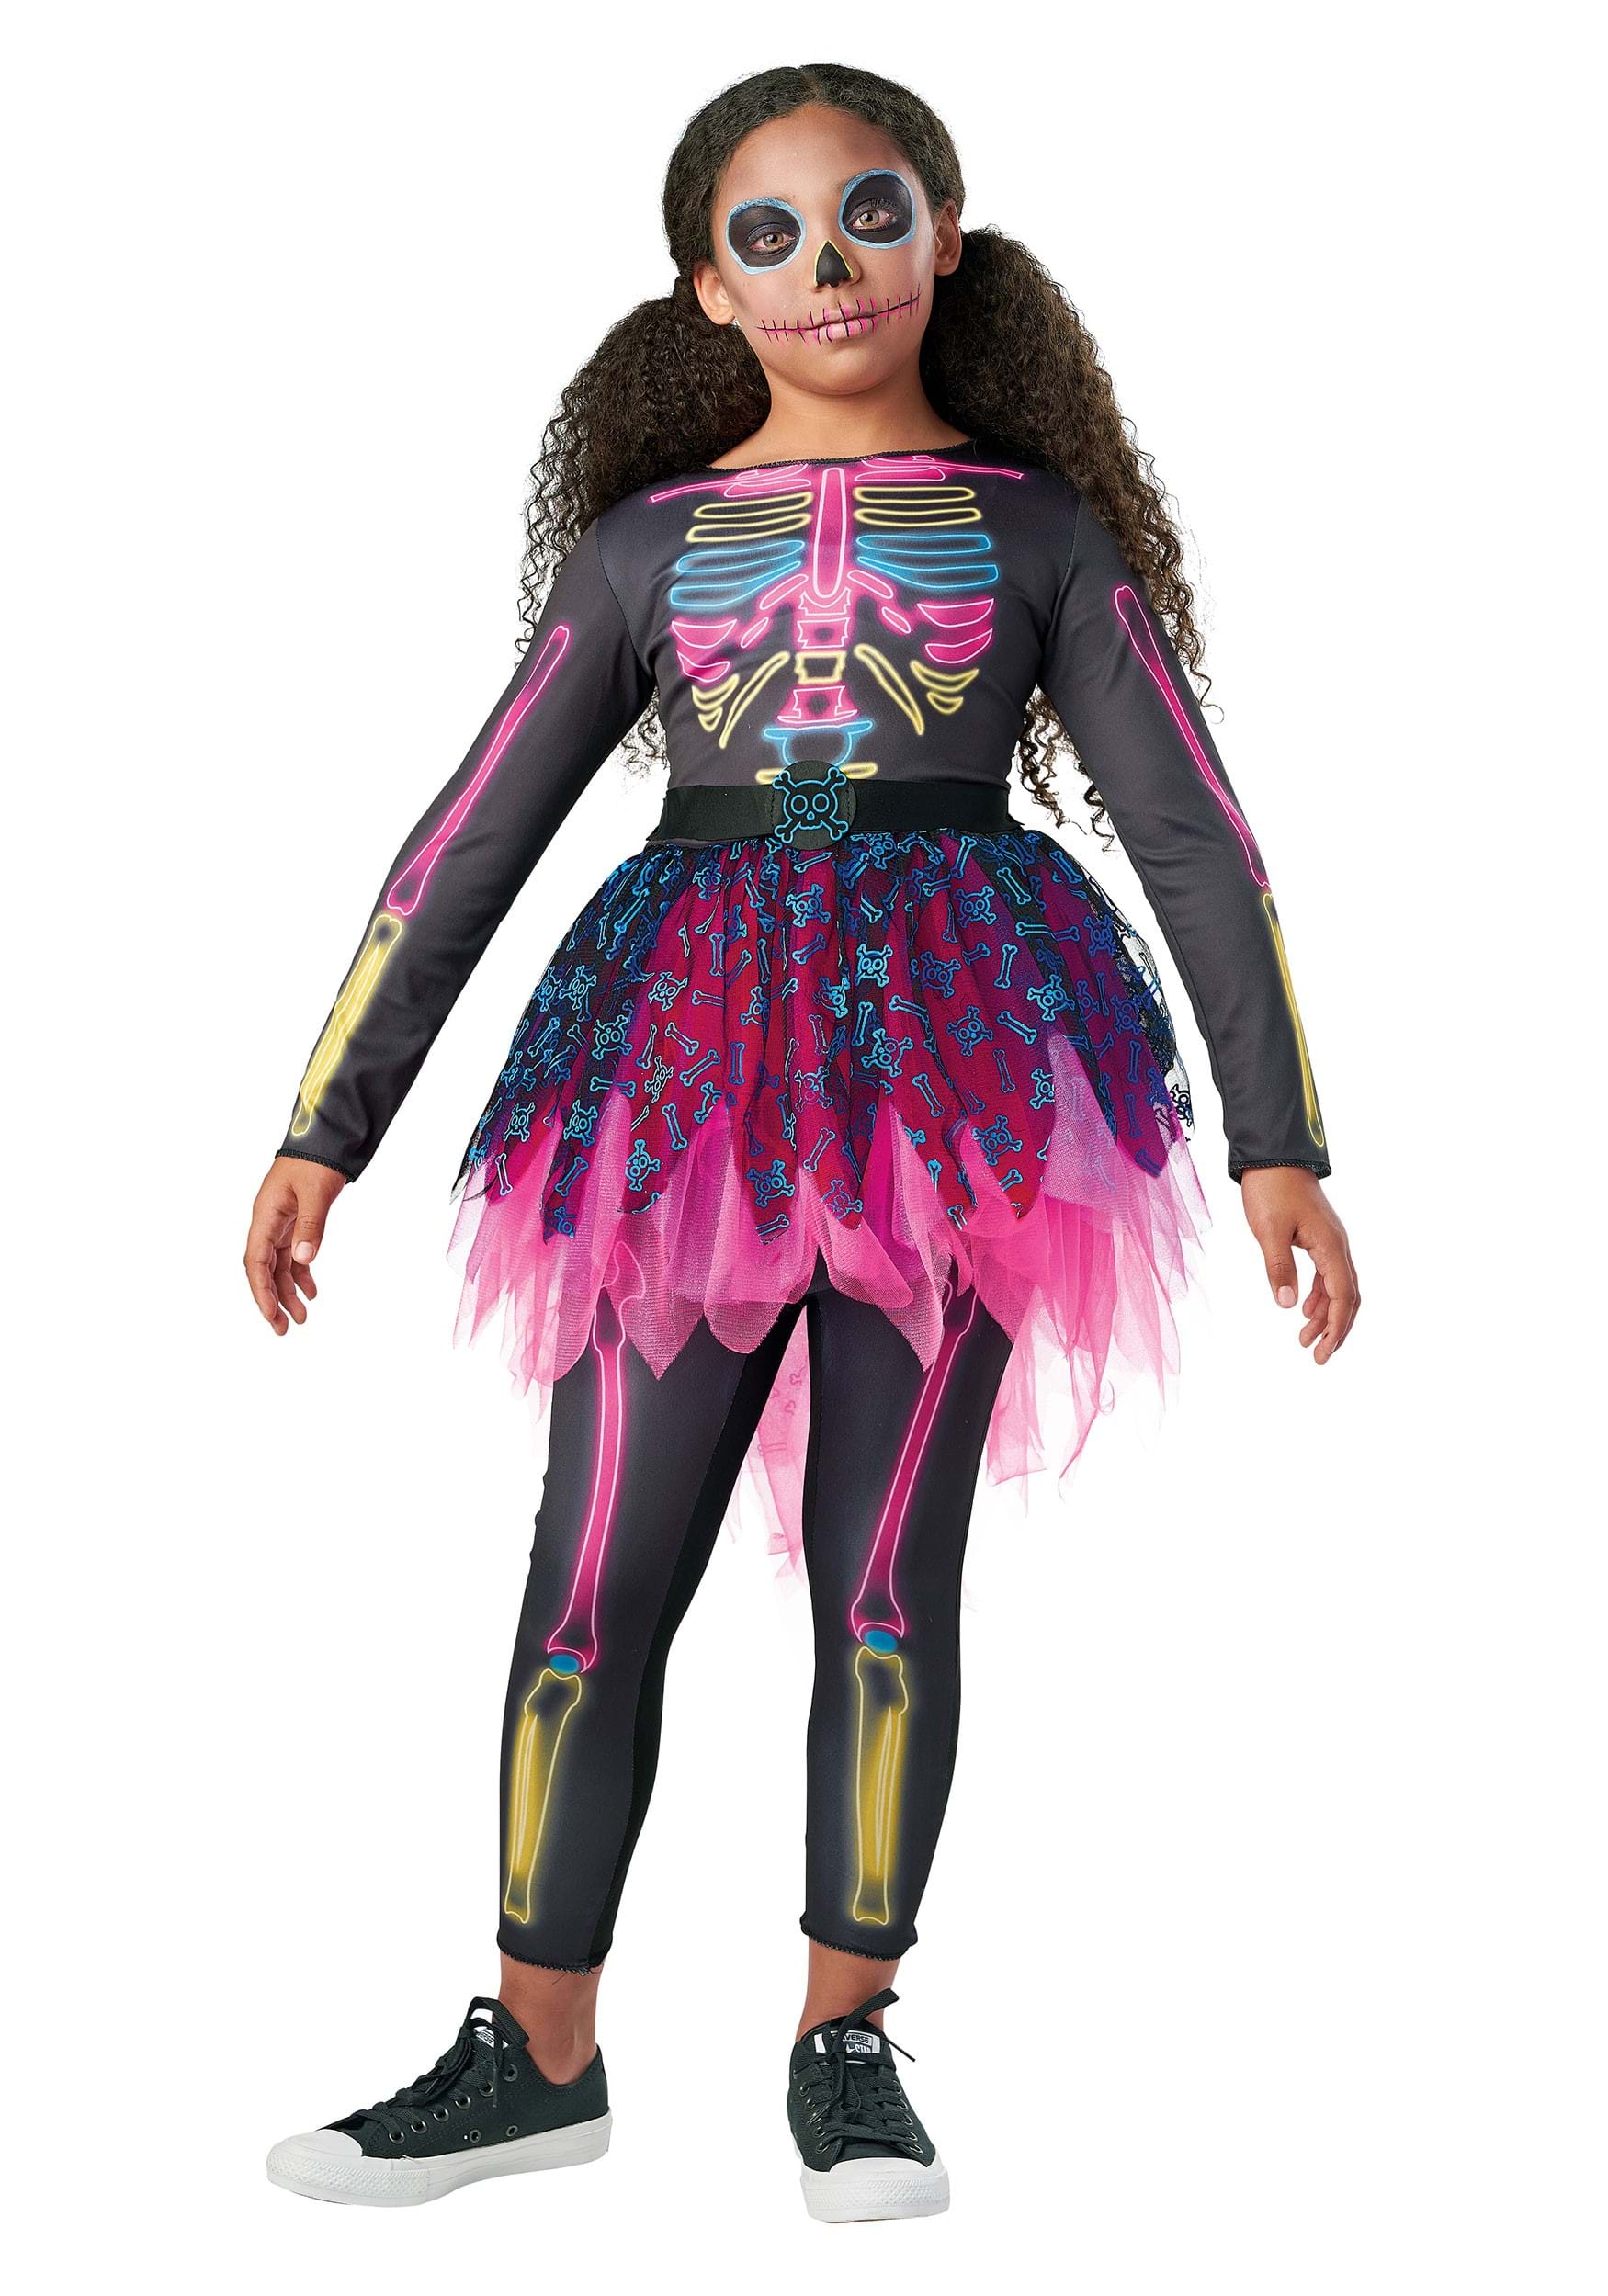 Kid's Neon Skeleton Costume Dress , Skeleton Costumes